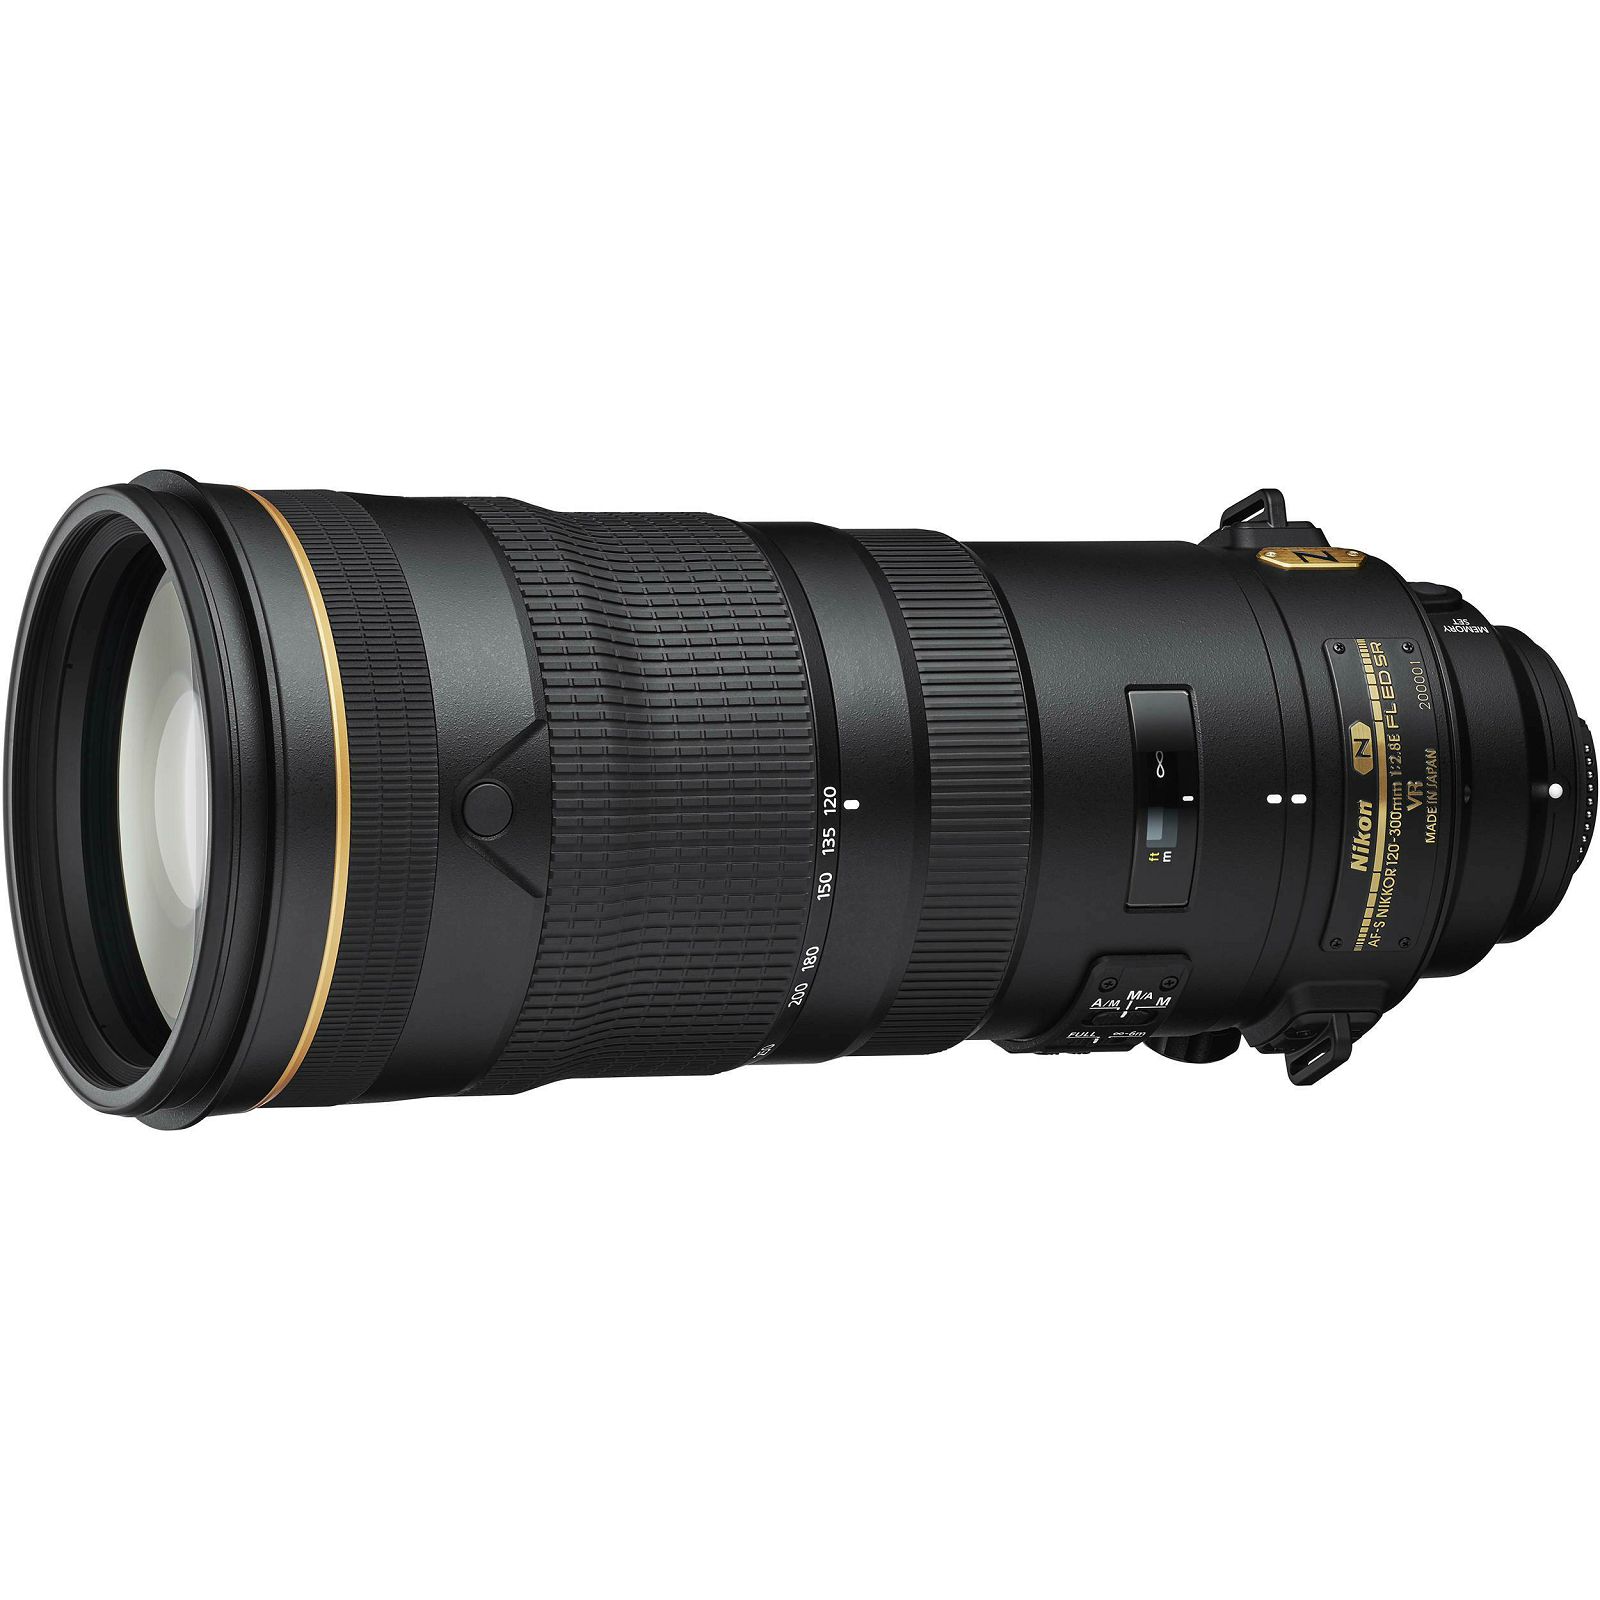 Nikon AF-S 120-300mm f/2.8E FL ED SR VR Nikkor telefoto objektiv (JAA840DA)